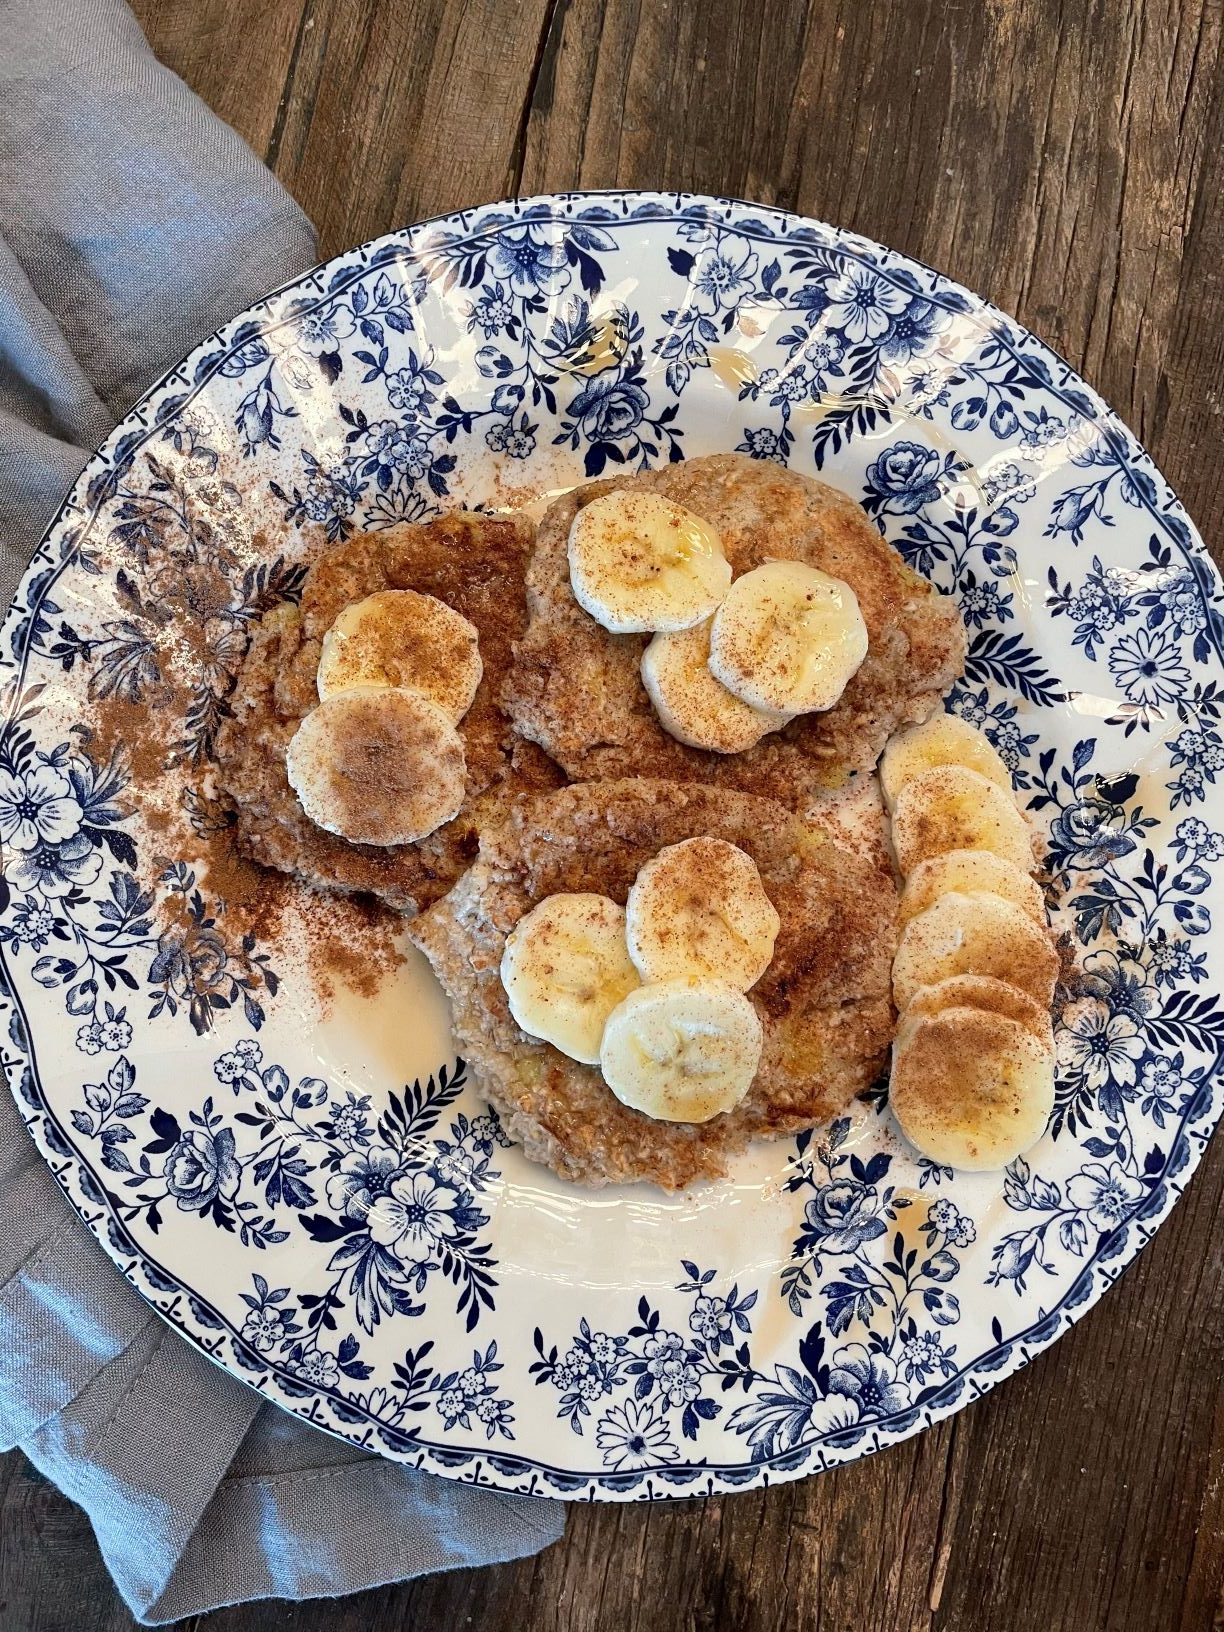 Easy Healthy Coconut Banana Oat Pancakes - Egg Free, Dairy Free, Gluten Free Recipe